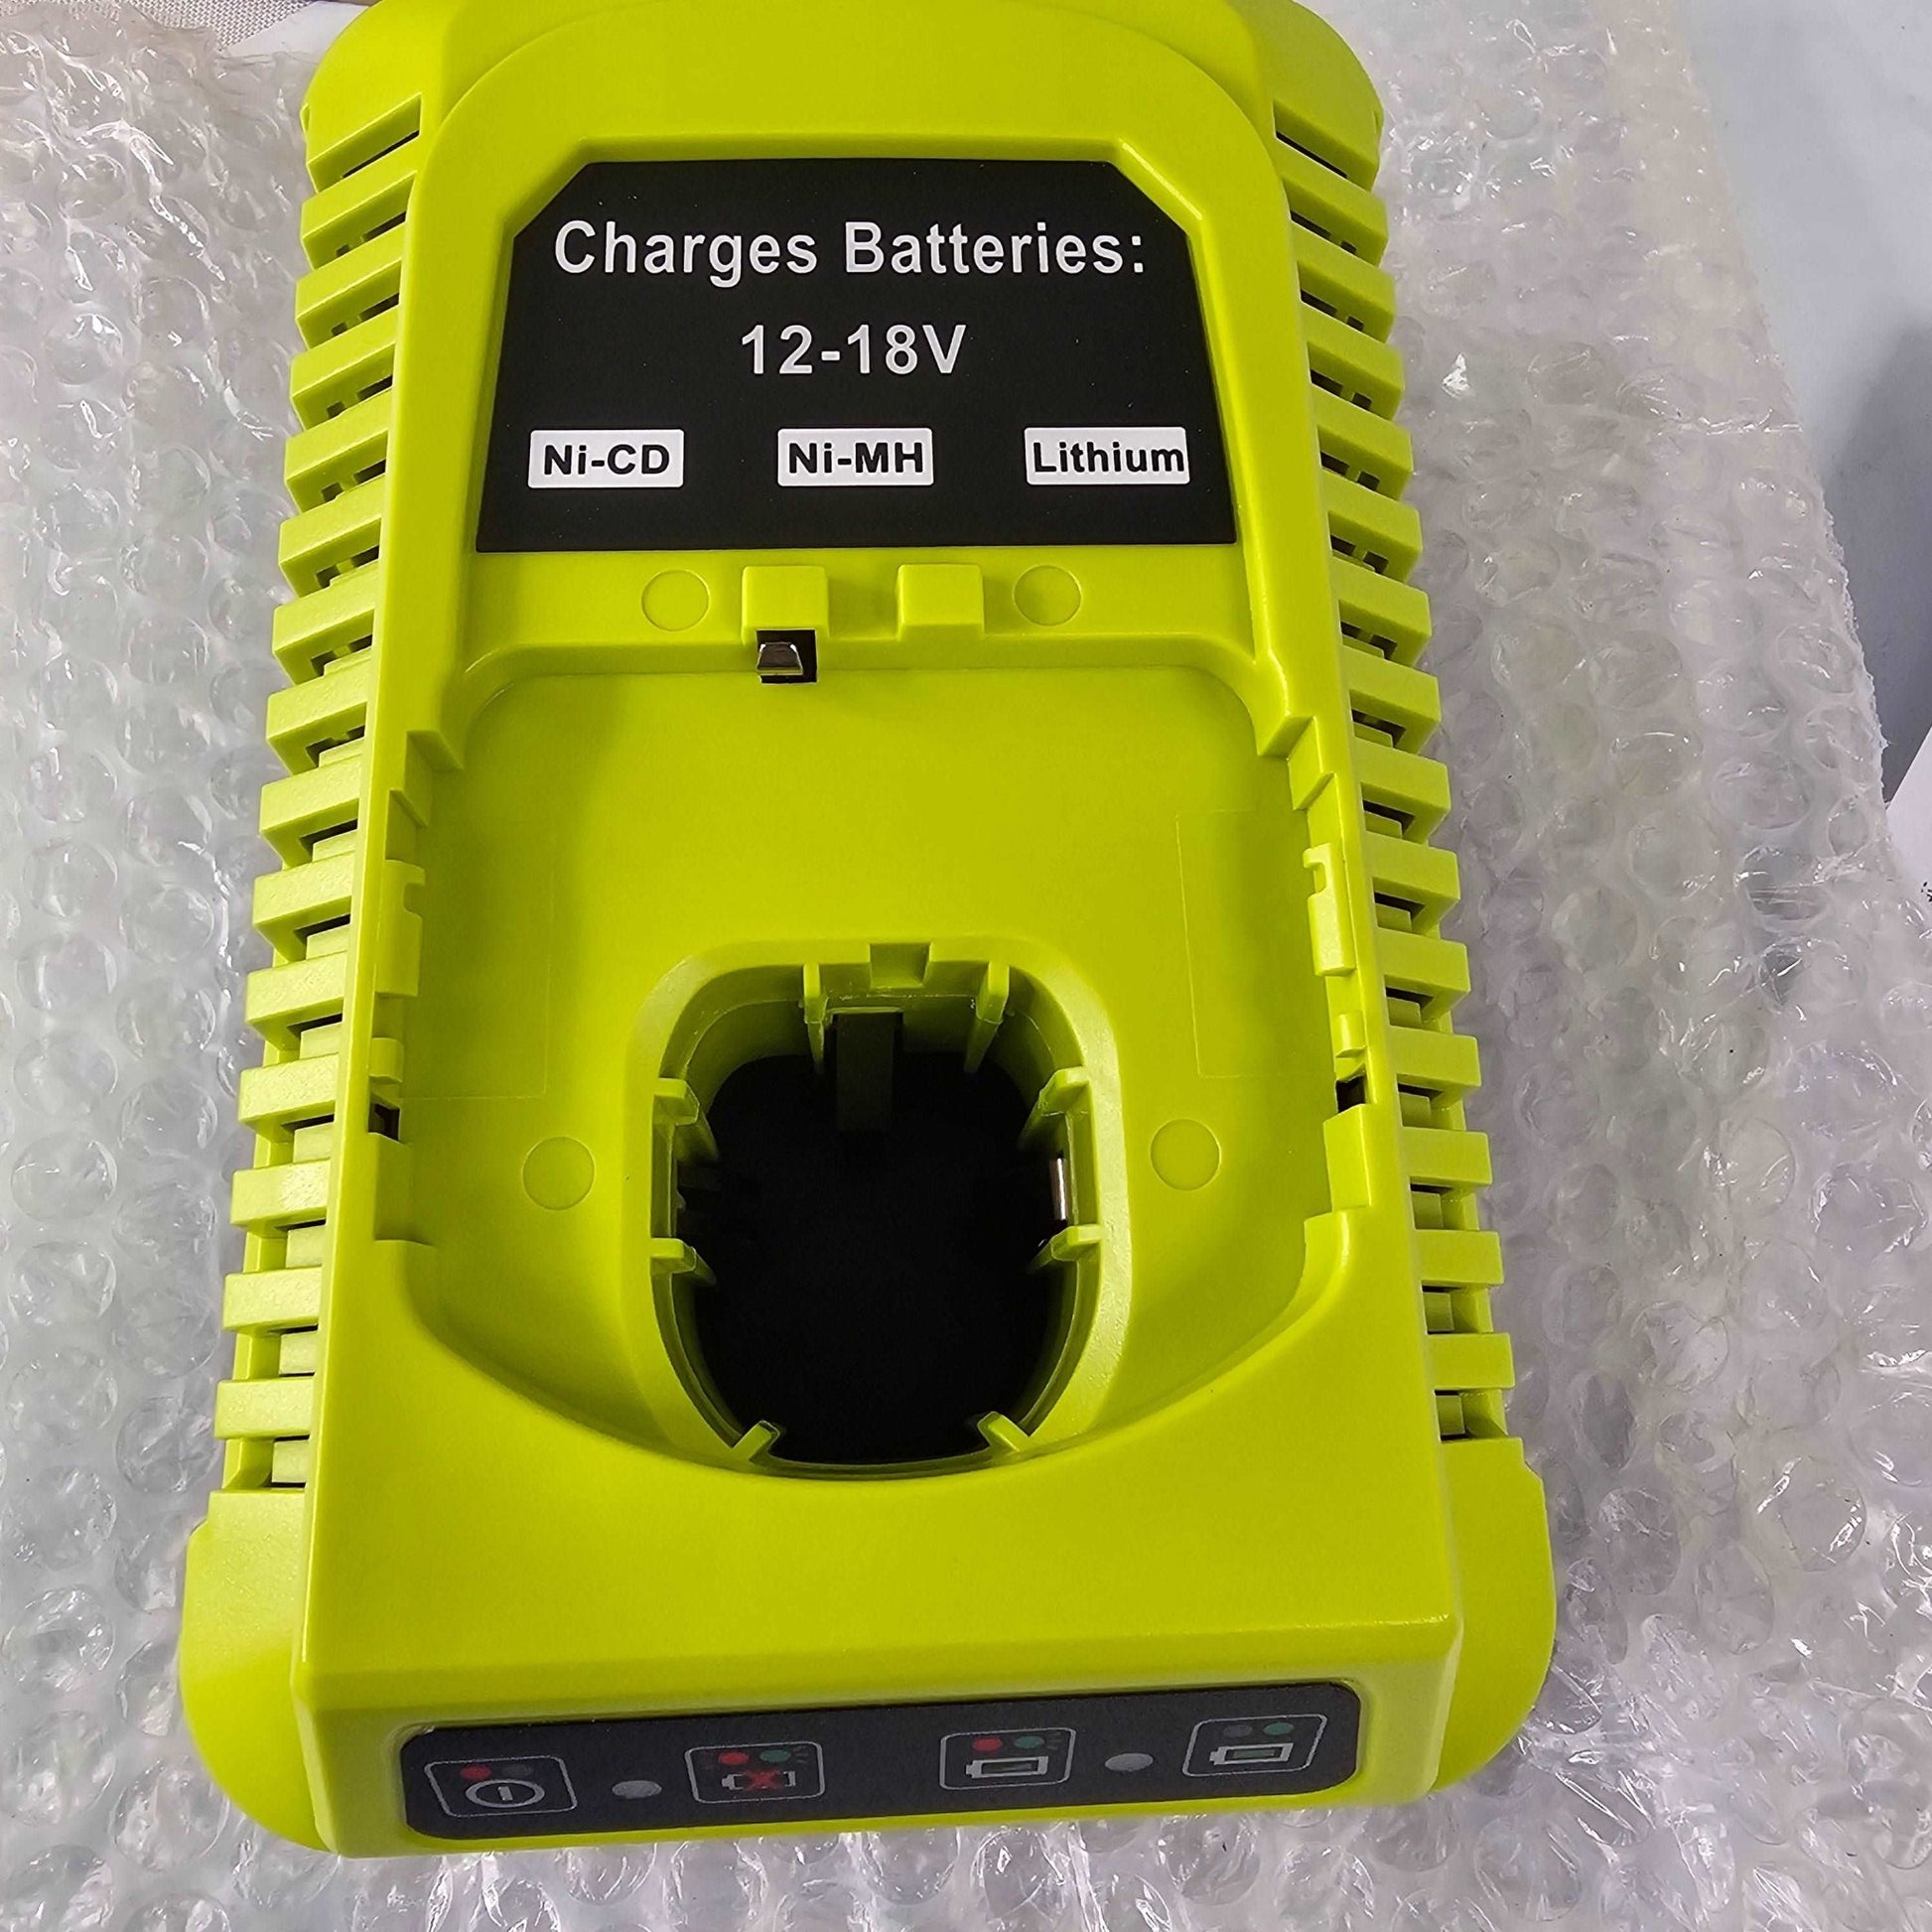 12-18V Battery Charger  Energup 140173004 - DQ Distribution